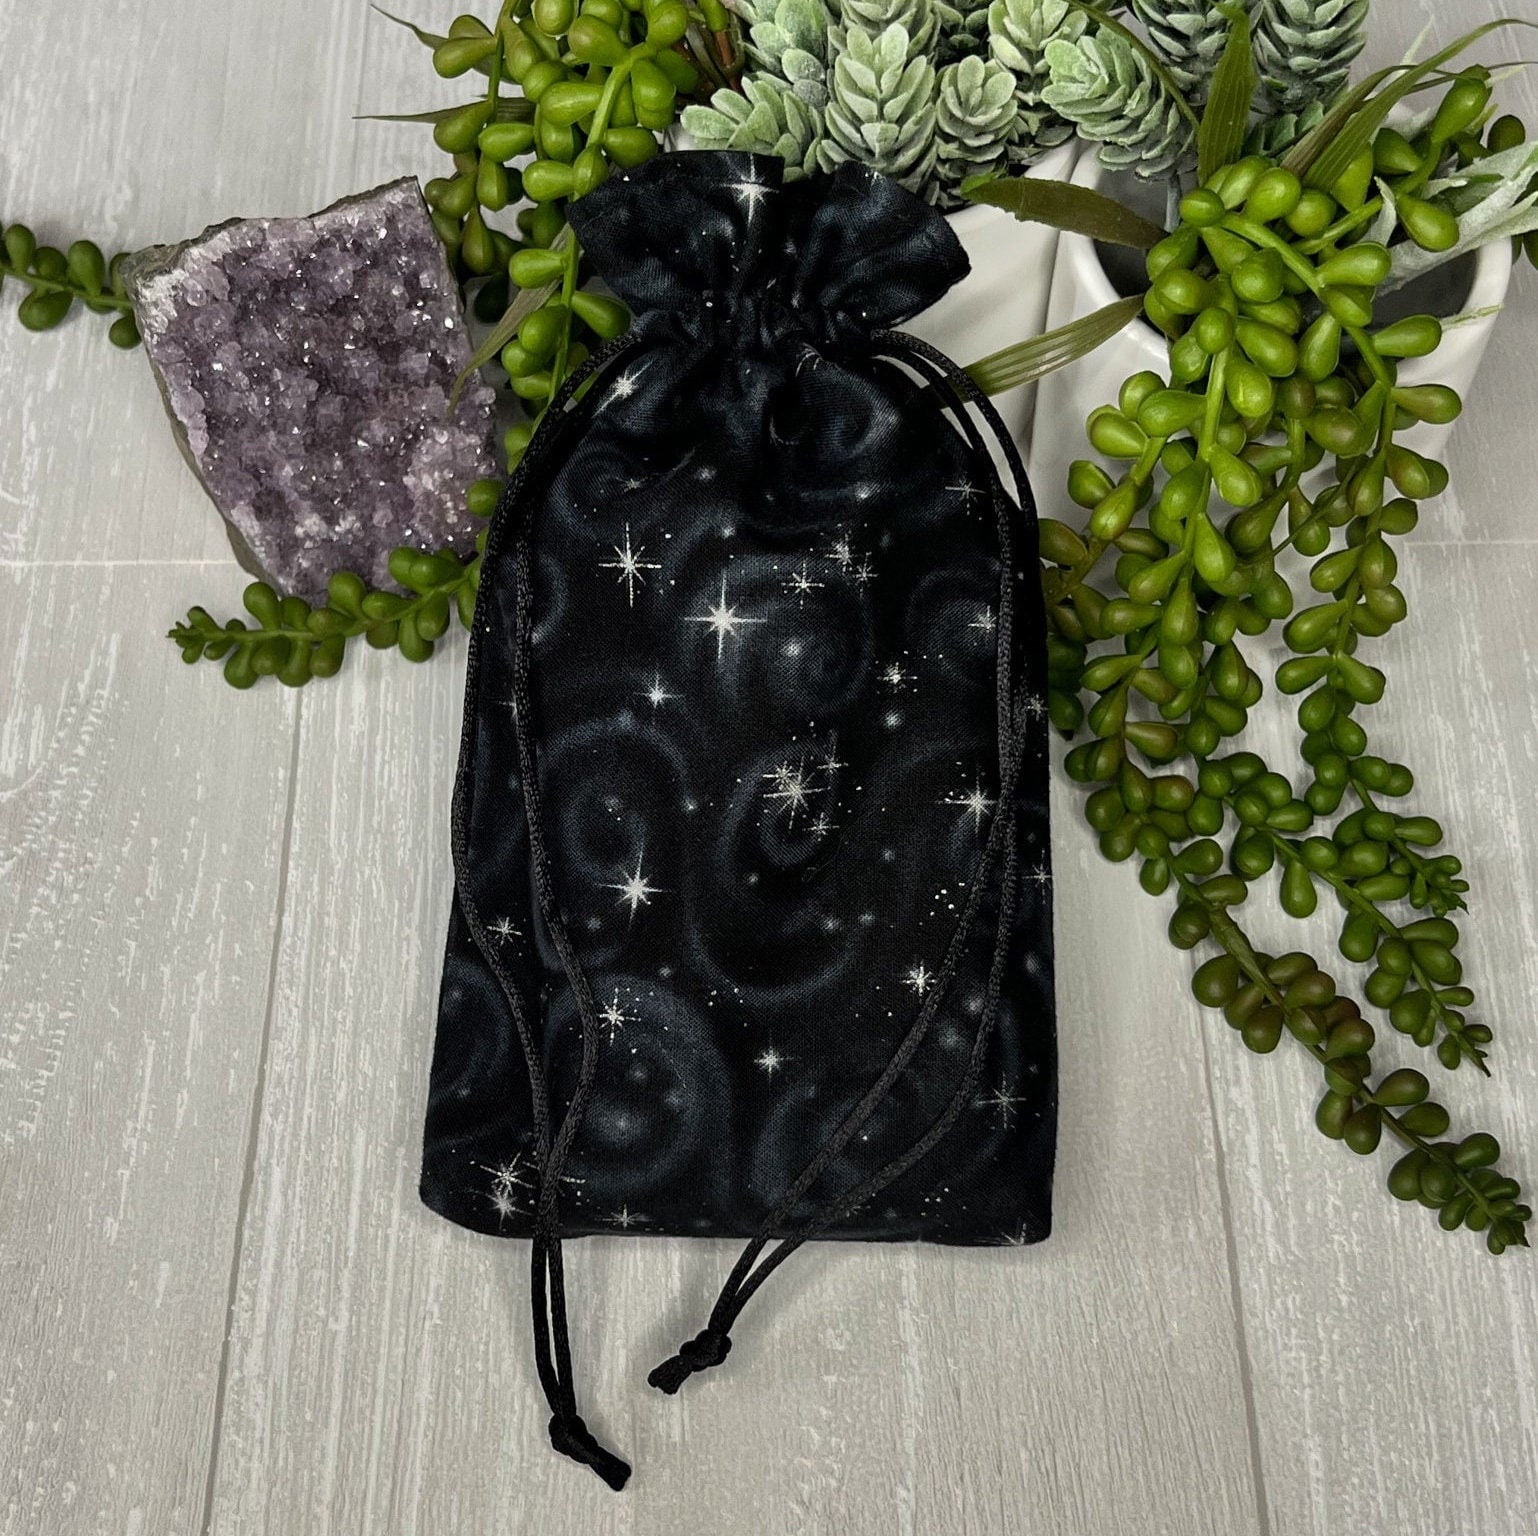 Black Celestial Tarot Bag, Drawstring Pouch, Standard Tarot Deck Storage, Divination Tools & Supplies, Pagan Witchcraft Tarot Reader Gifts